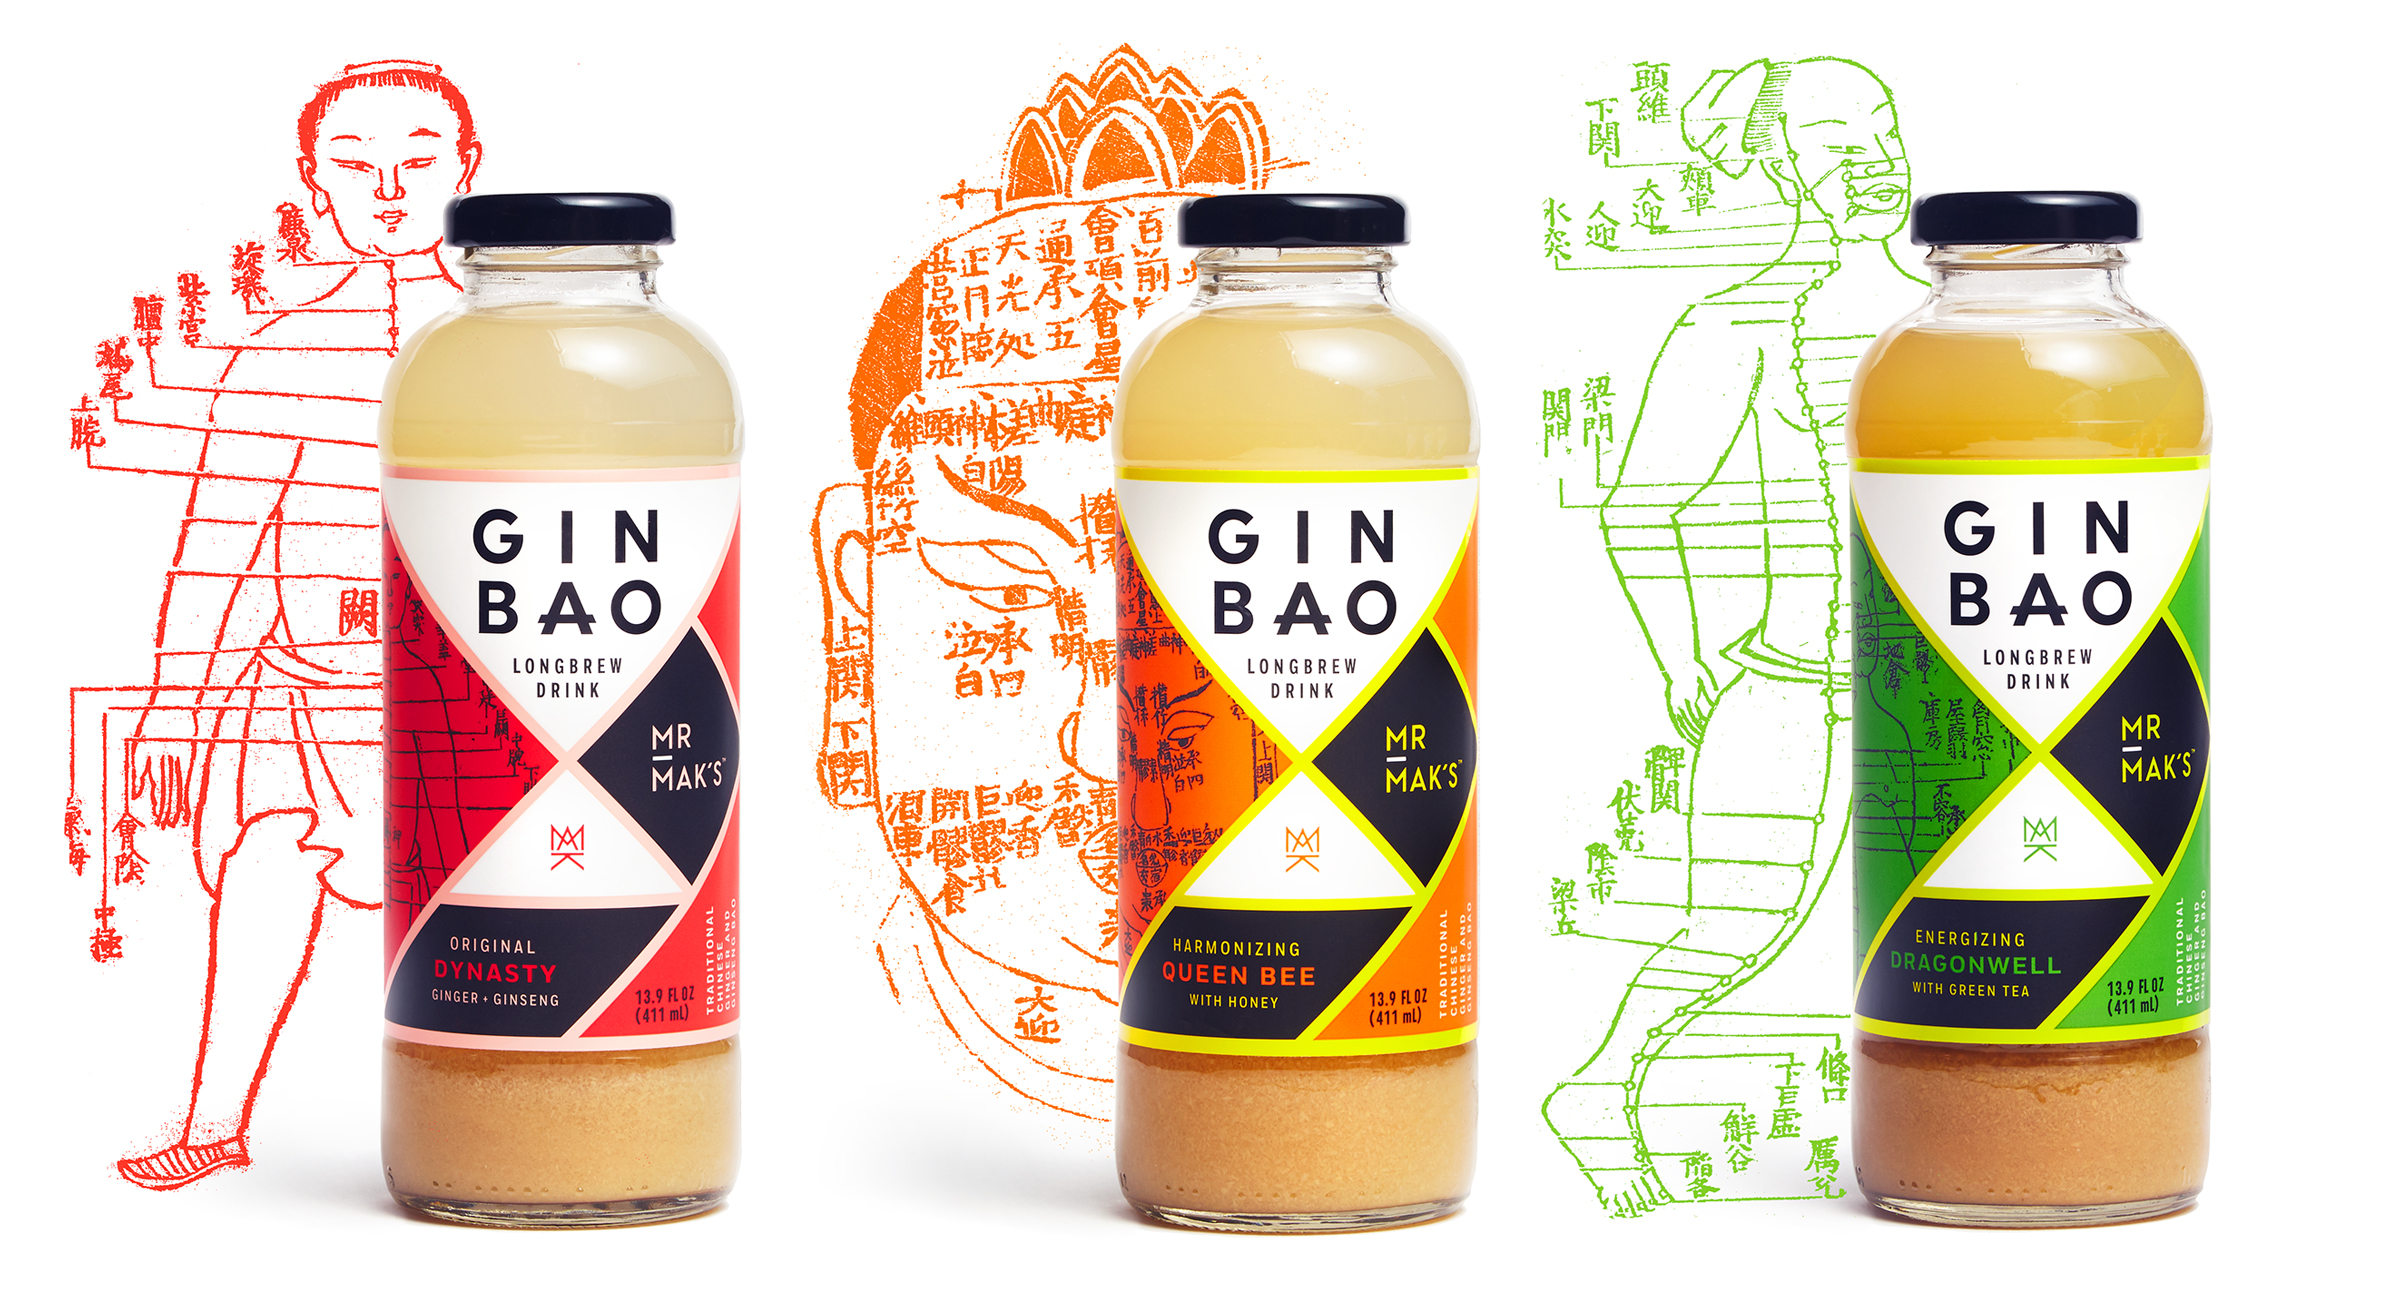 Mr. Mak's Ginbao packaging by Werner Design Werks